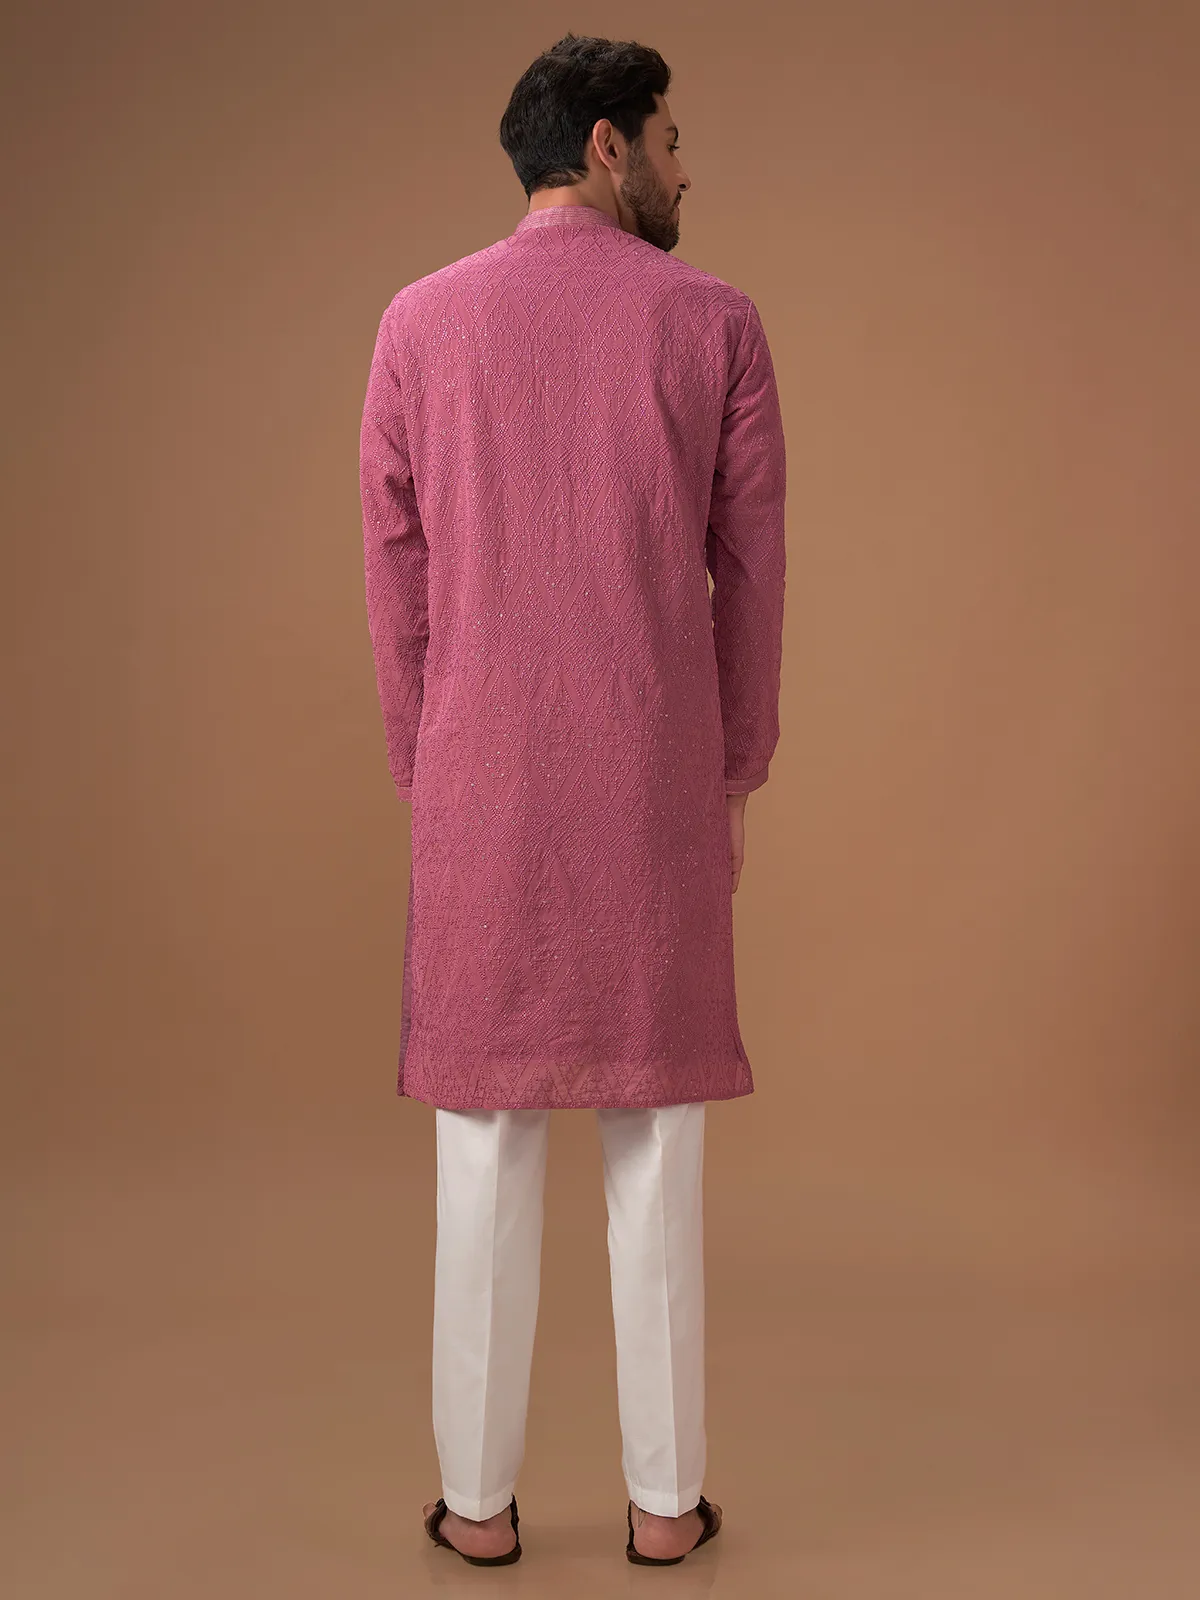 Classy pink georgette kurta suit